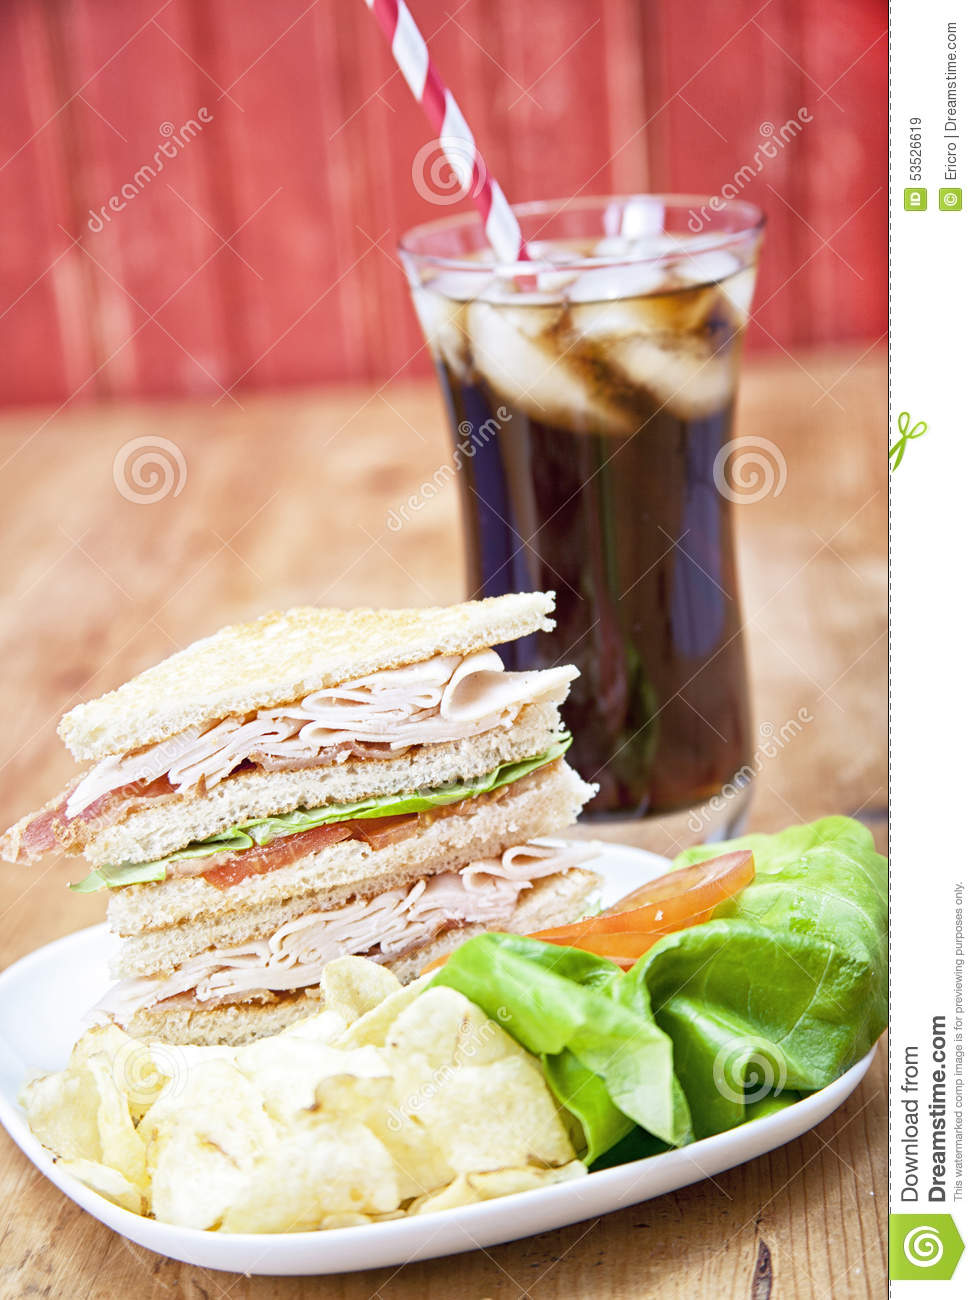 Turkey Club Sandwich With Chips And Soda